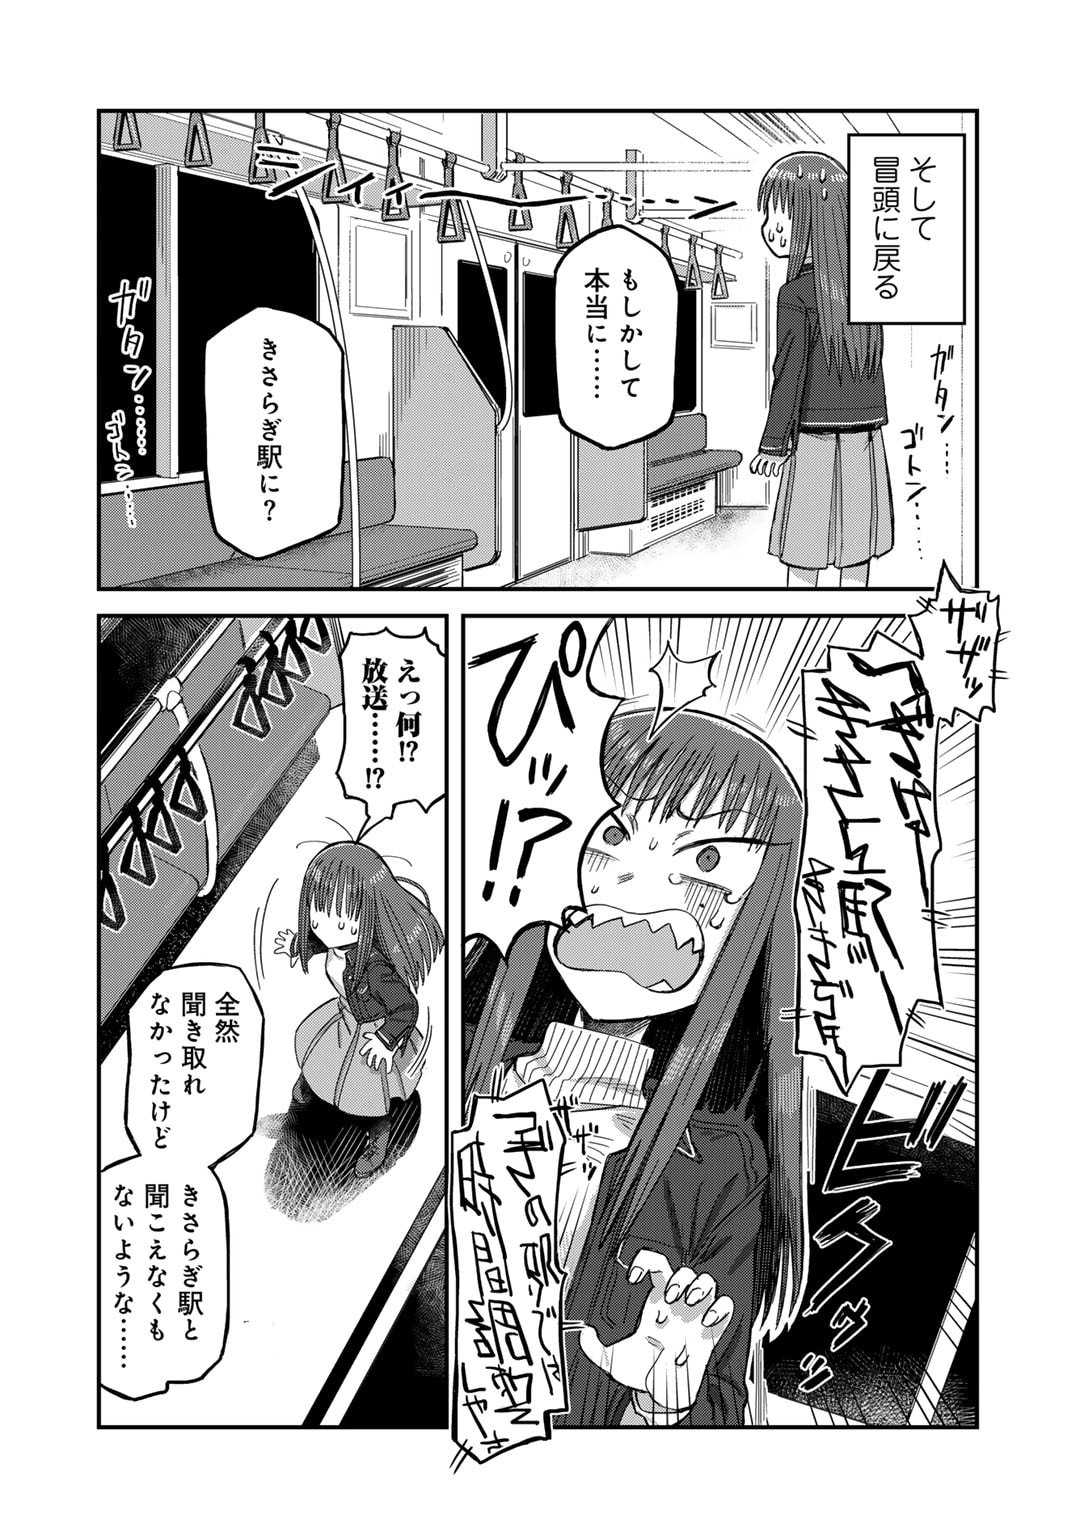 Kurono-san wa Occult ga Suki! - Chapter 4 - Page 10